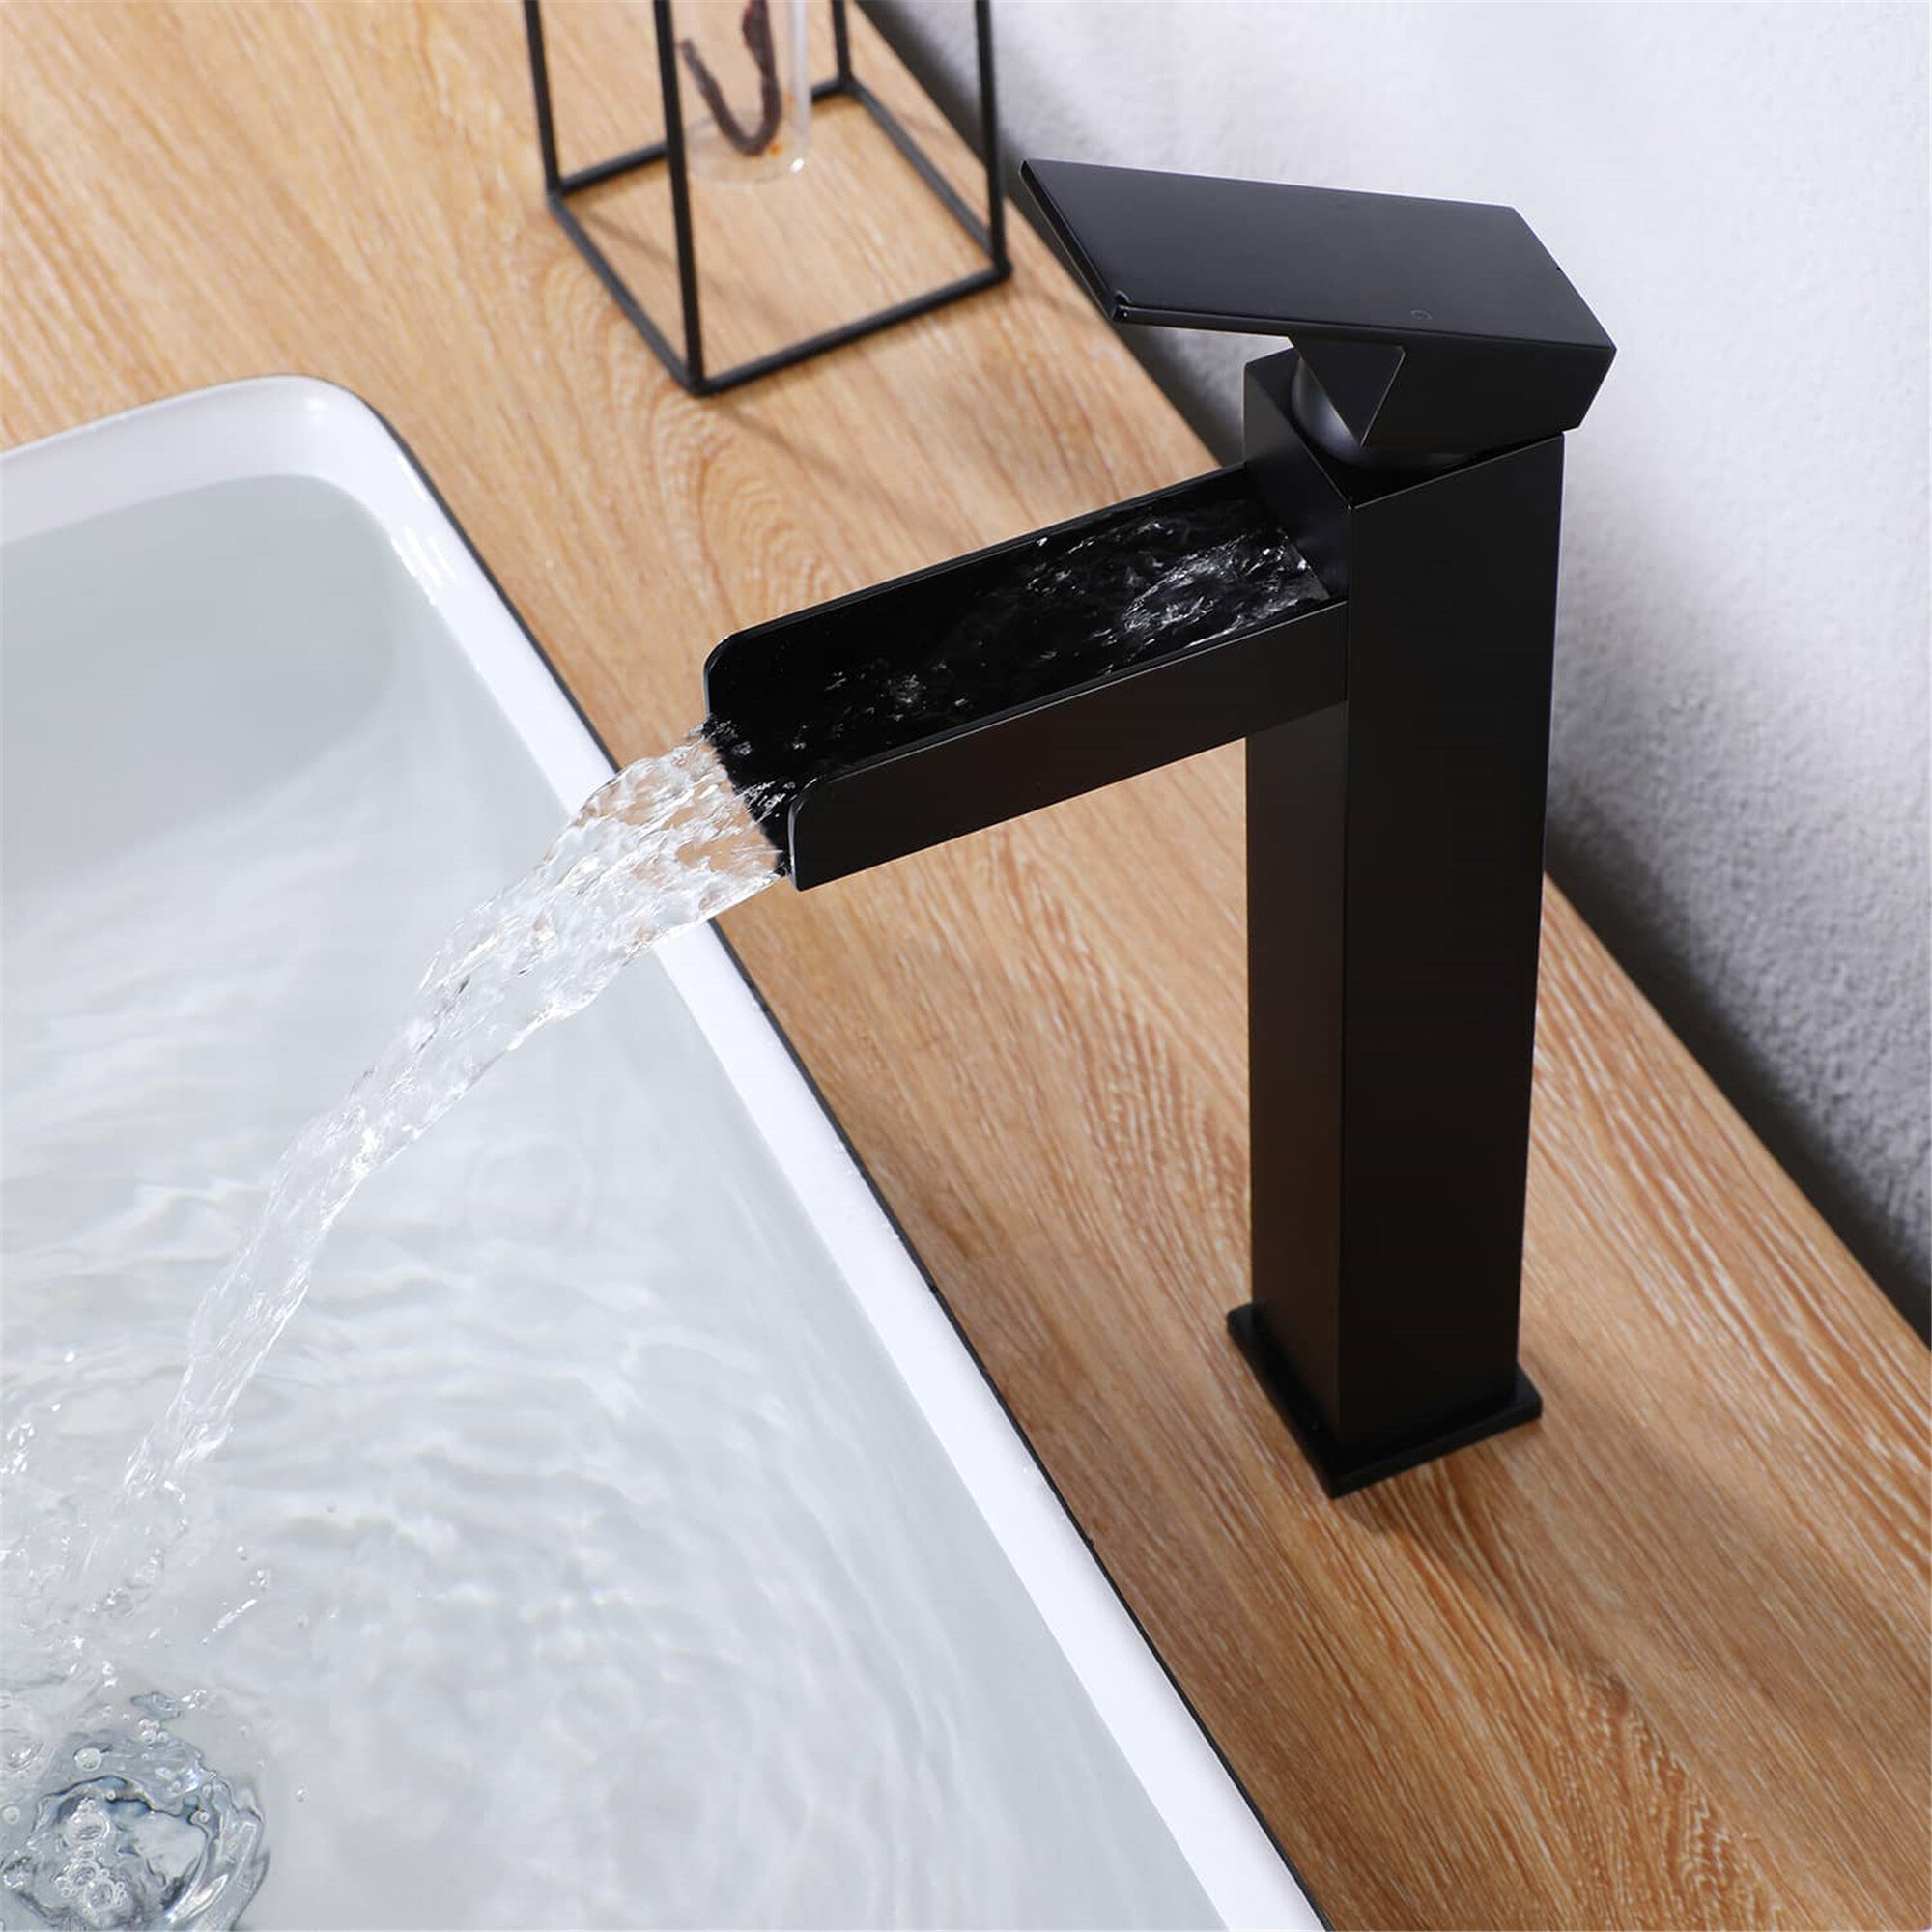 Waterfall Spout Bathroom Vanity Sink Faucet Basin Mixer Tap Single Handle Hole-U